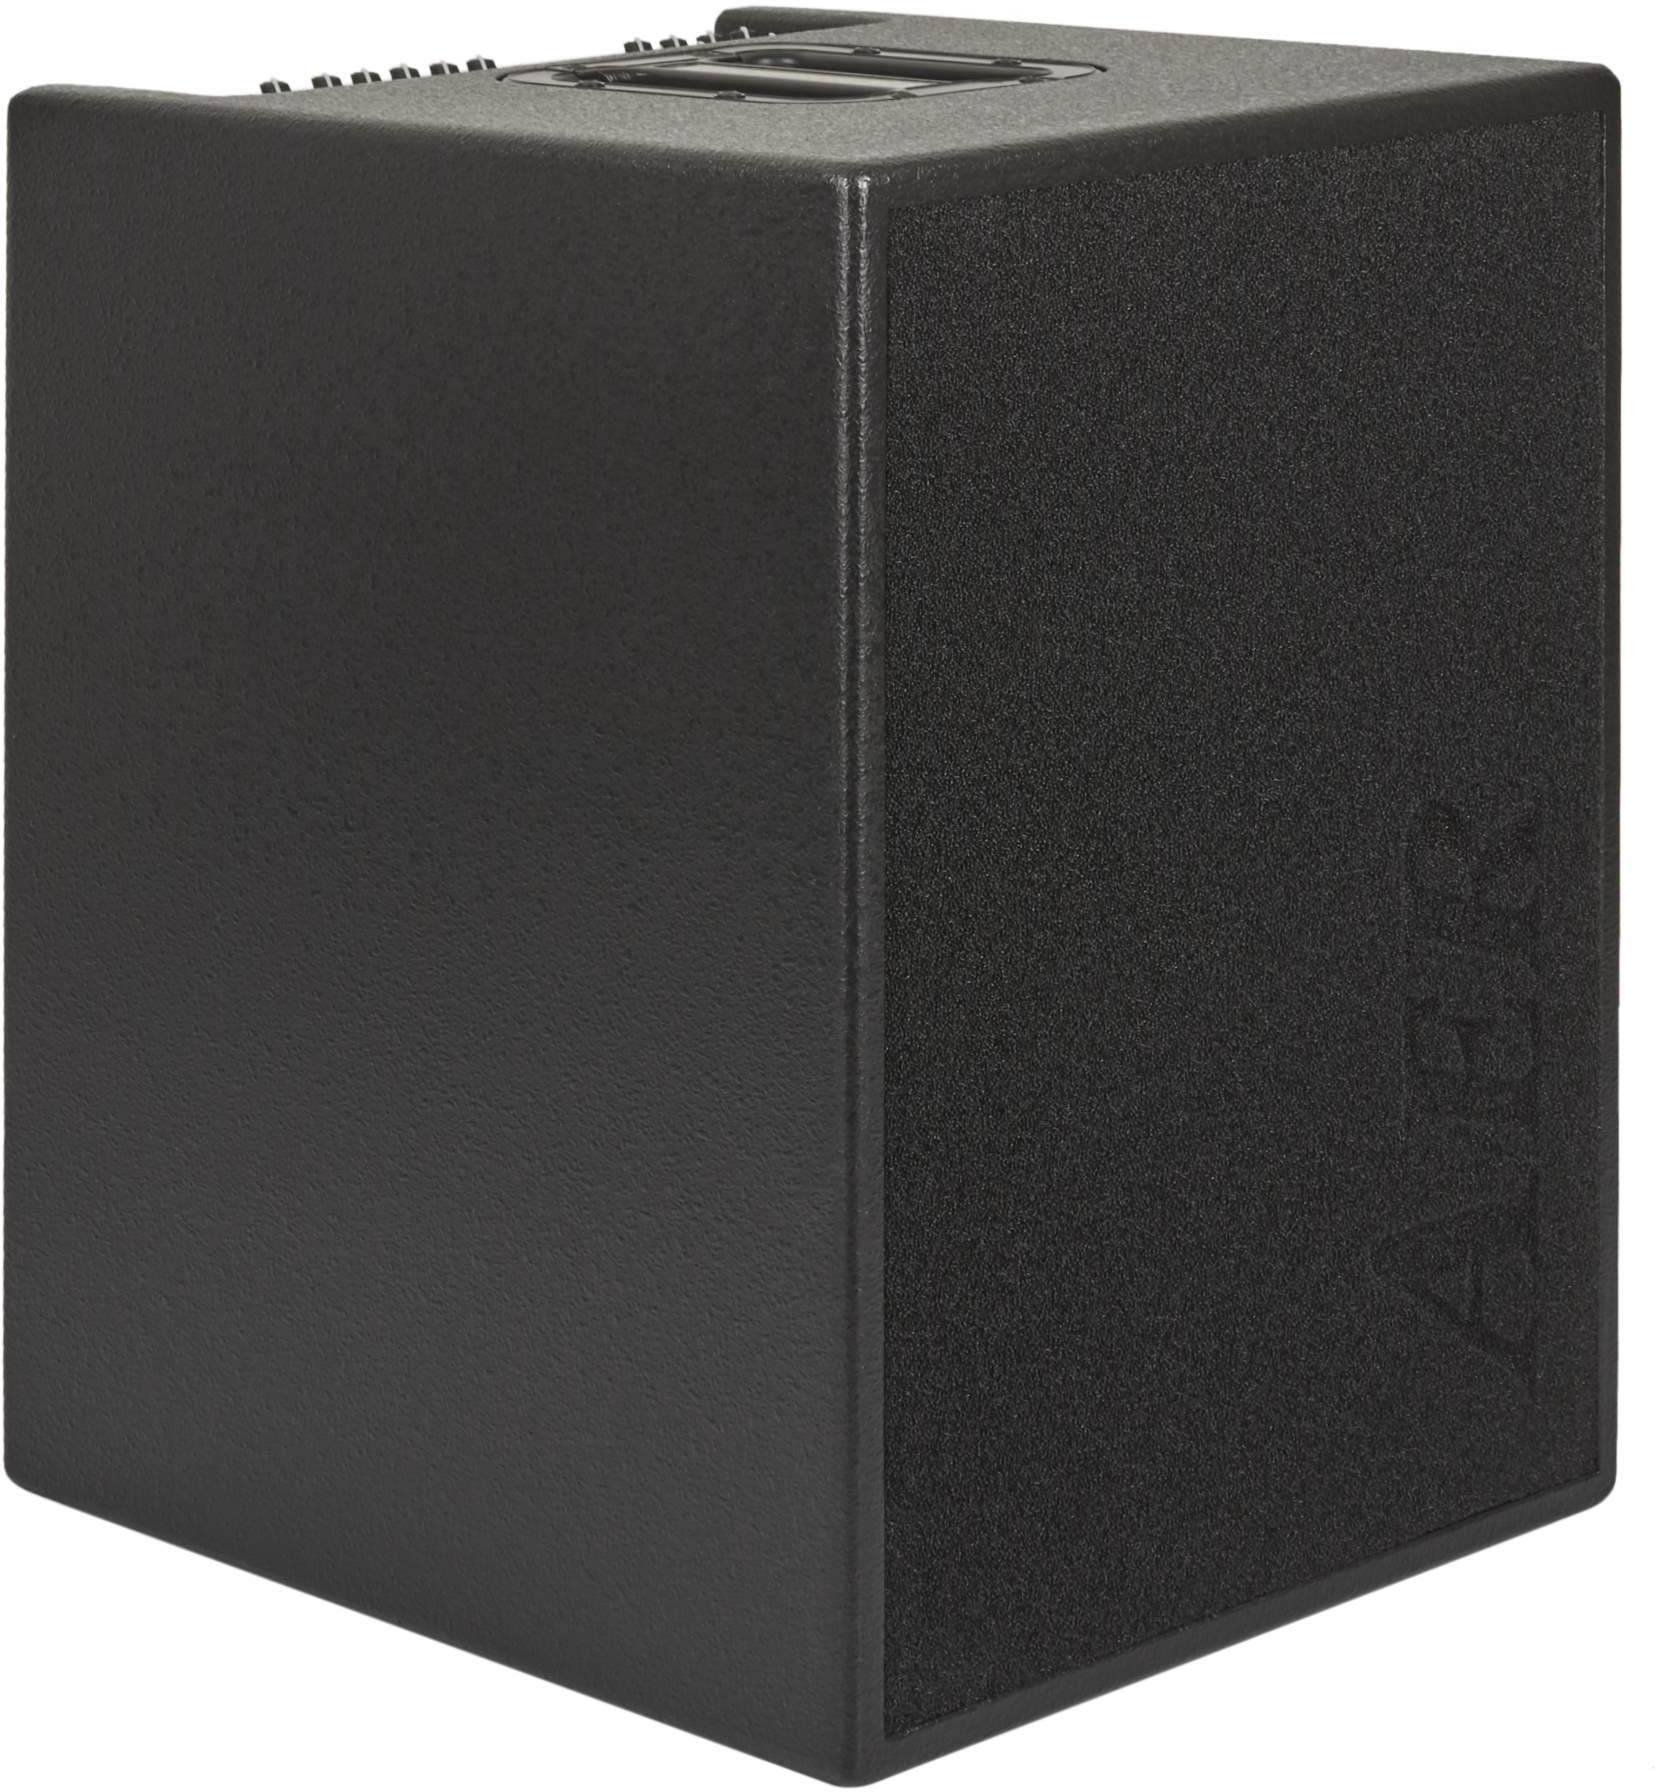 Aer Basic Performer 2 200w 4x8 Black +housse - Combo amplificador para bajo - Variation 1